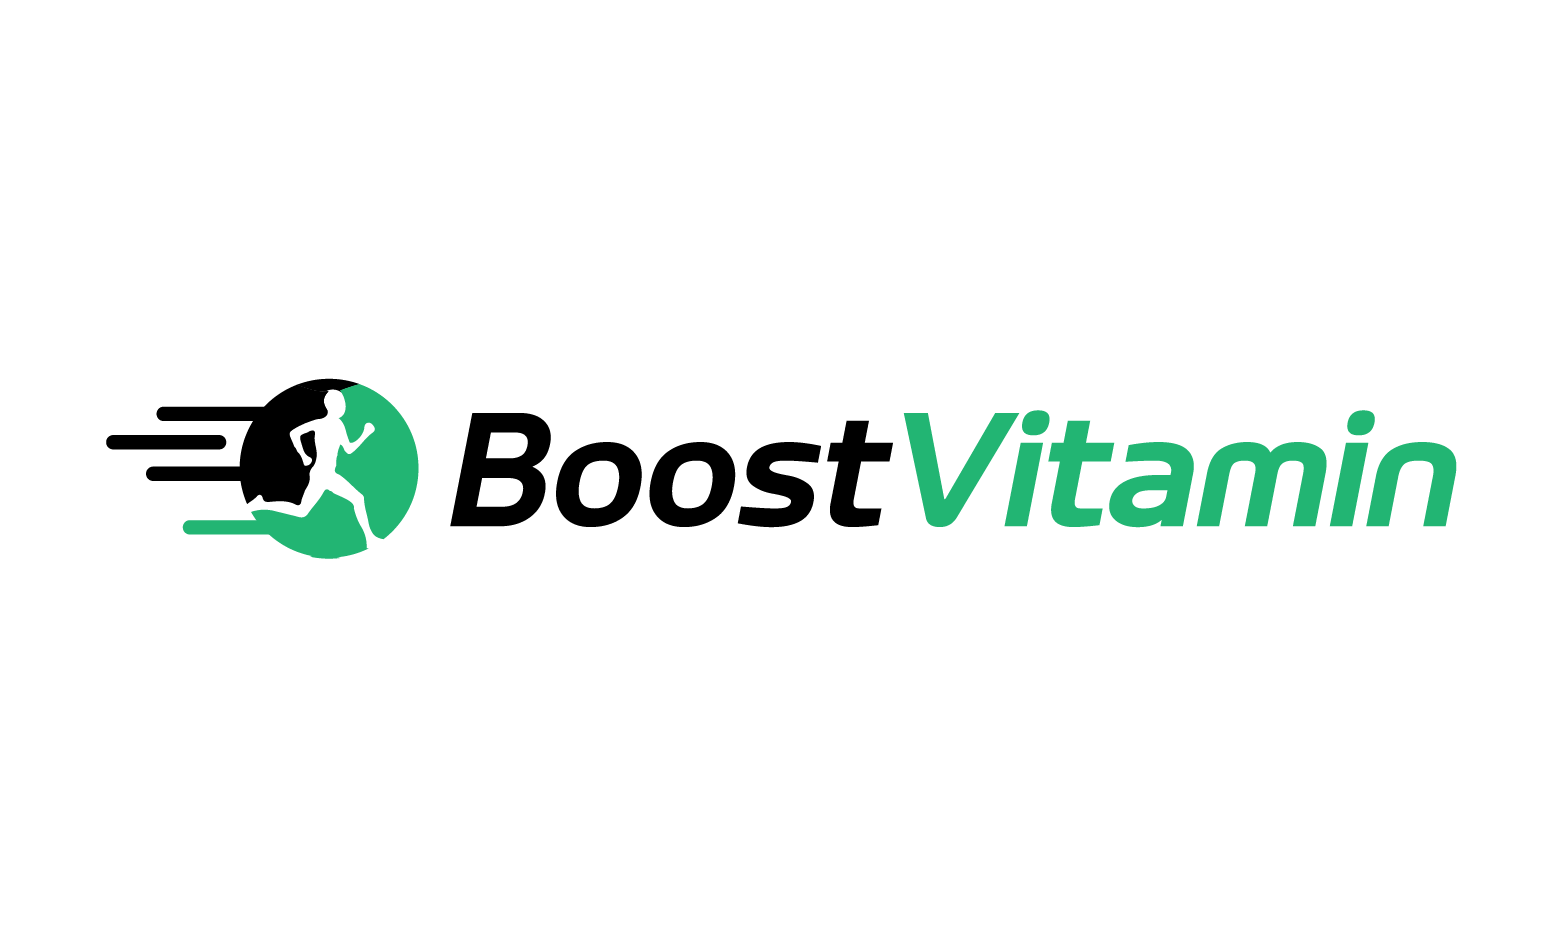 BoostVitamin.com - Creative brandable domain for sale